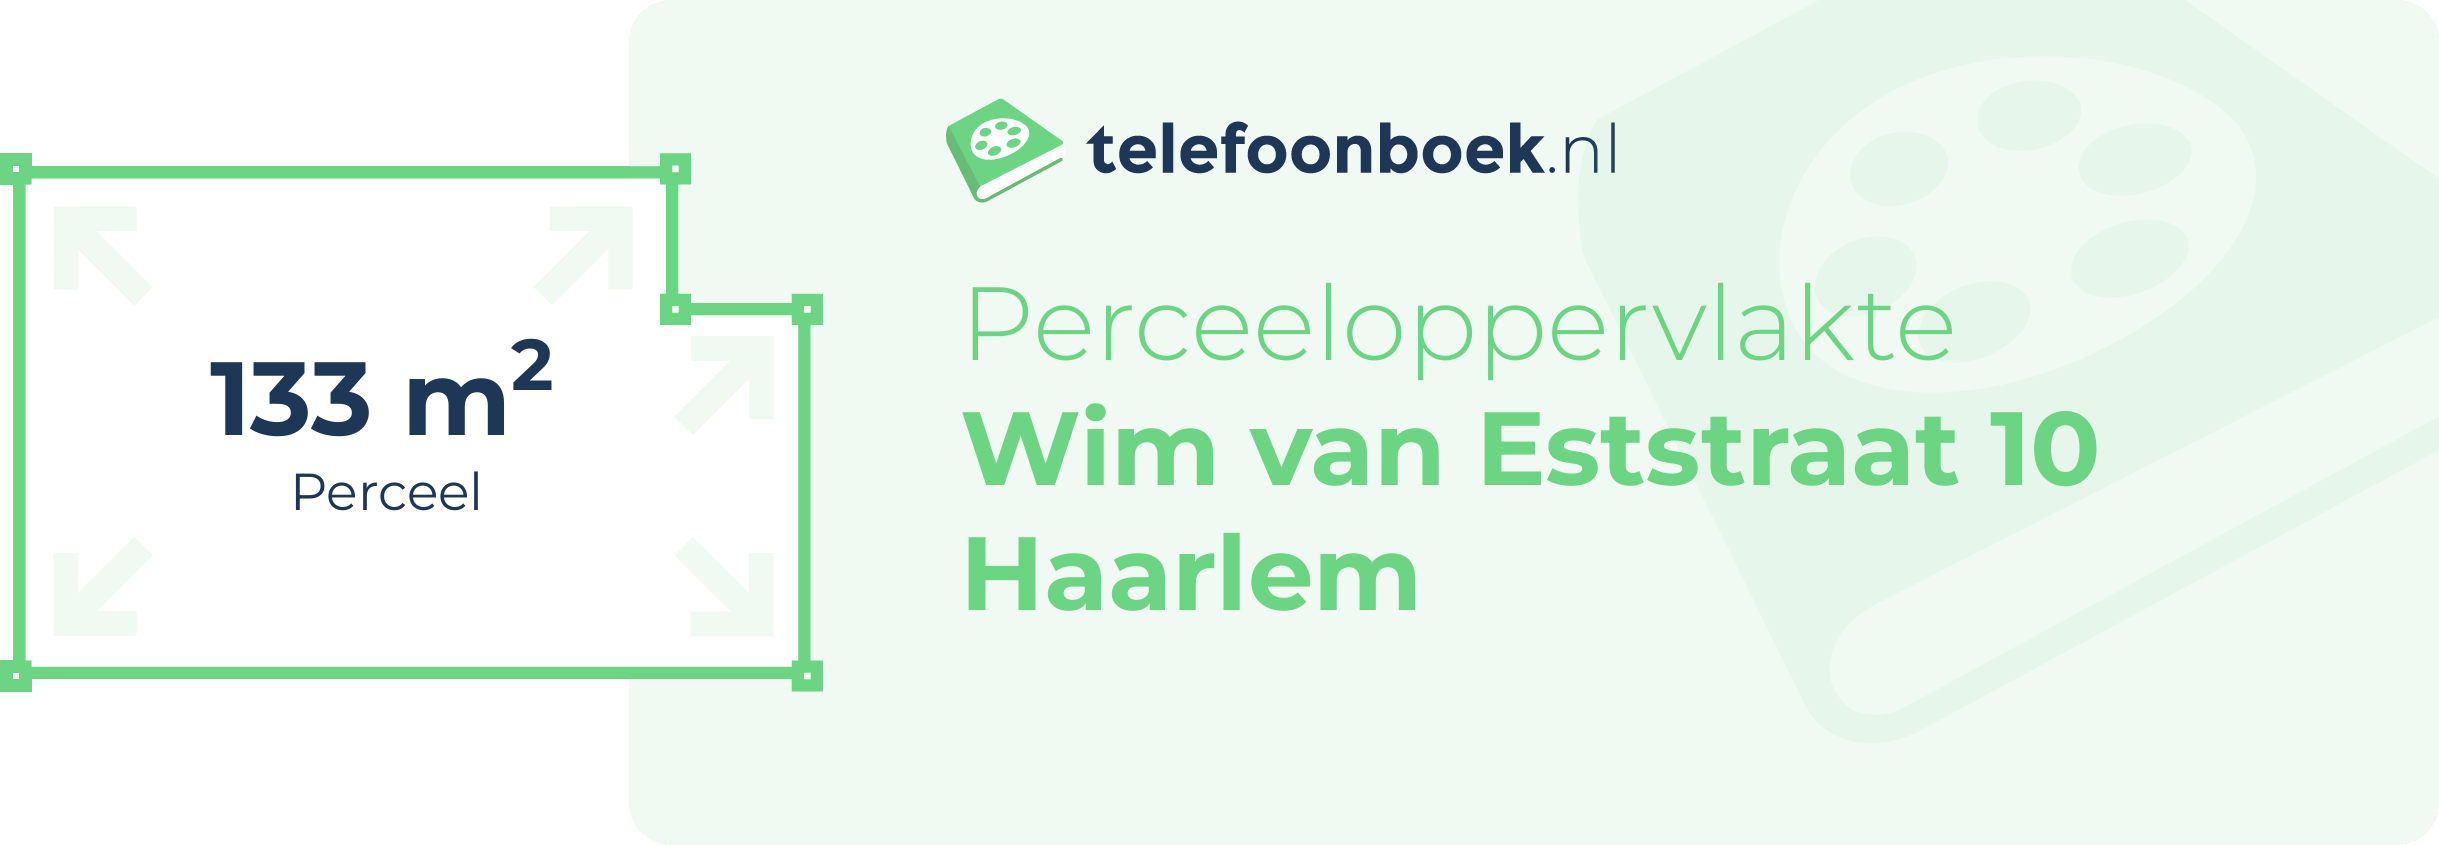 Perceeloppervlakte Wim Van Eststraat 10 Haarlem